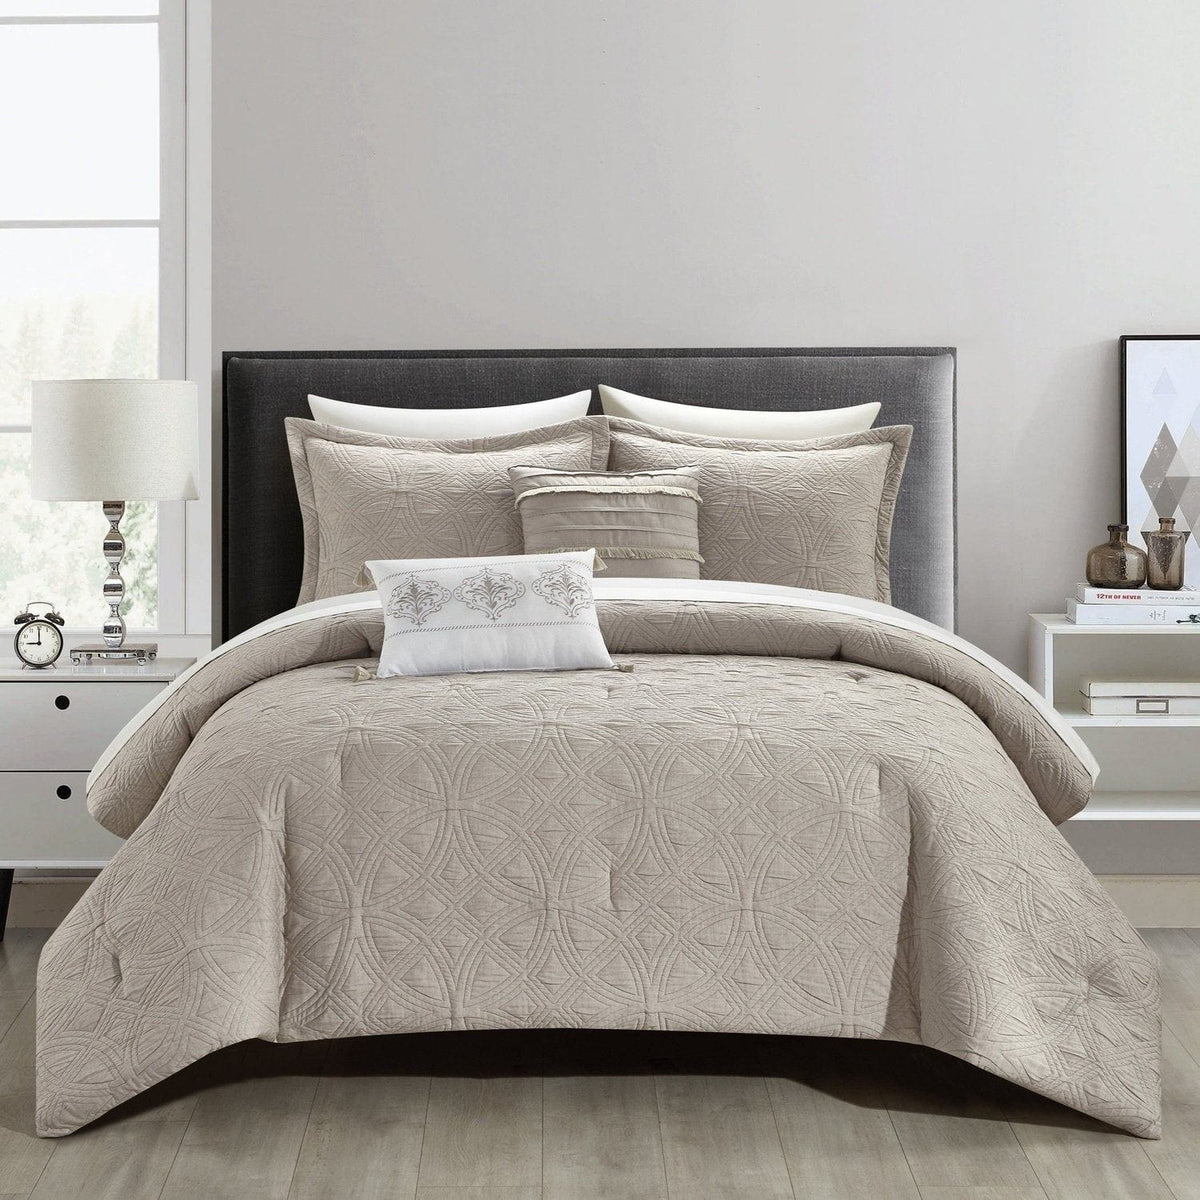 NY&C Home Artista 9 Piece Cotton Blend Jacquard Comforter Set Taupe